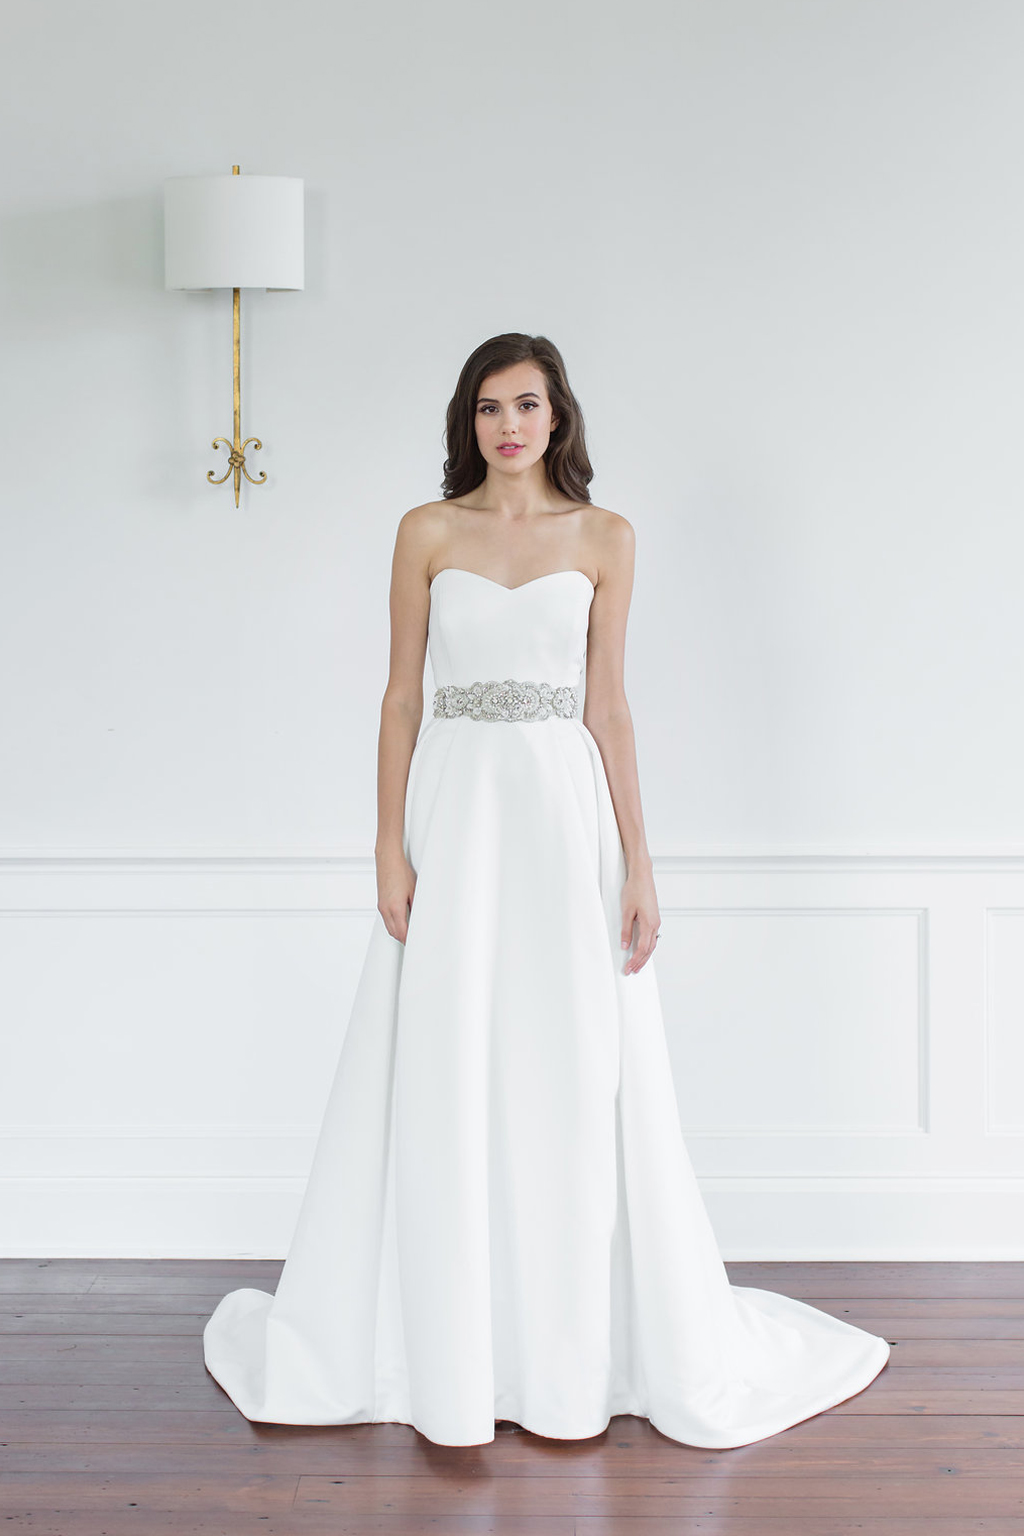 Archer Bridal Gown by Designer Kate McDonald Bridal - Secret Garden Collection - Charleston Bridal Shop